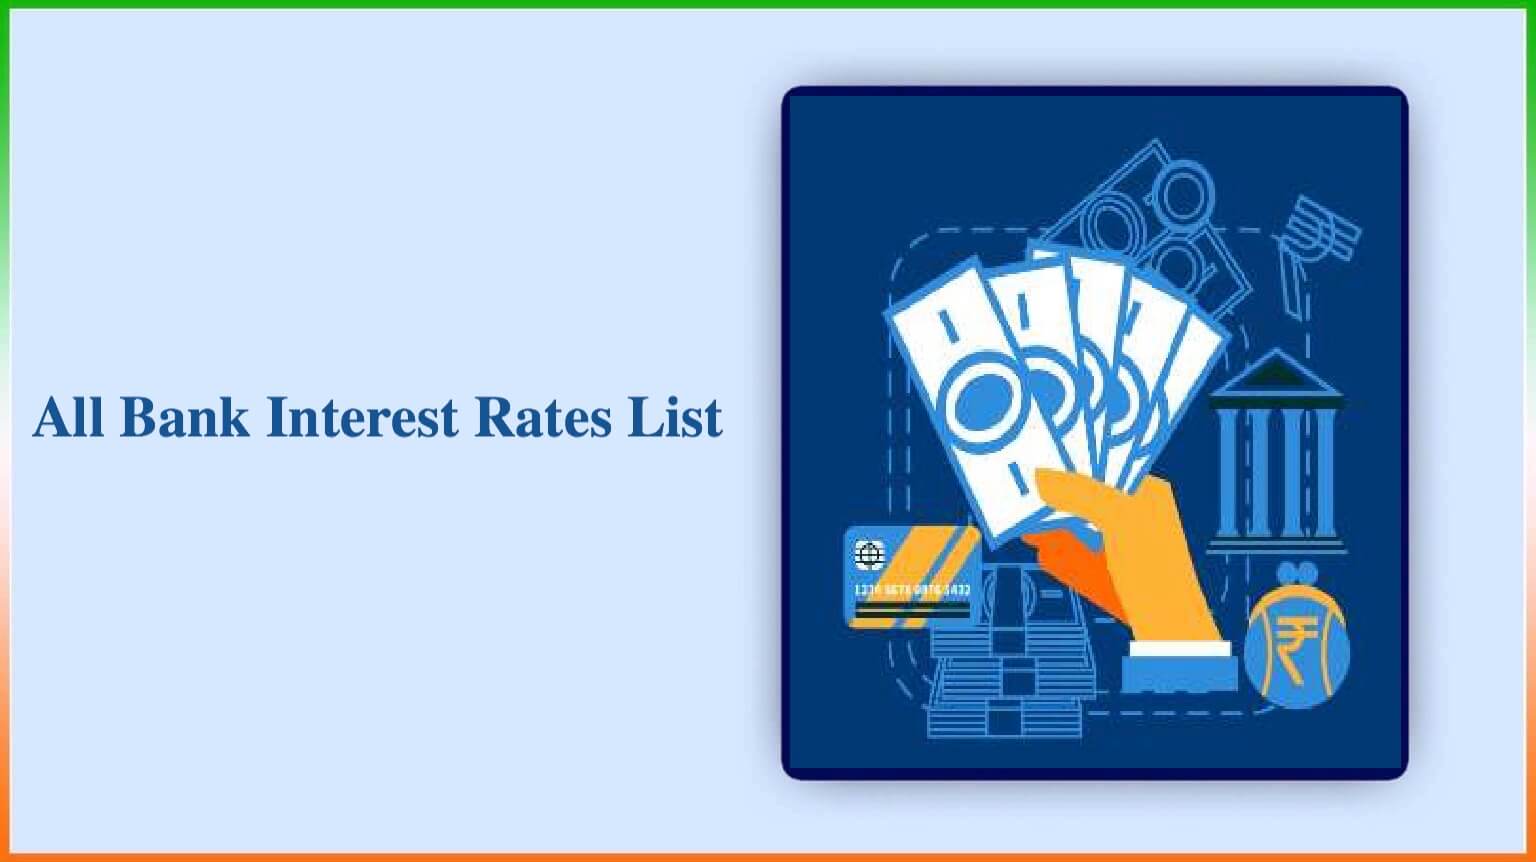 All Bank Interest Rates List